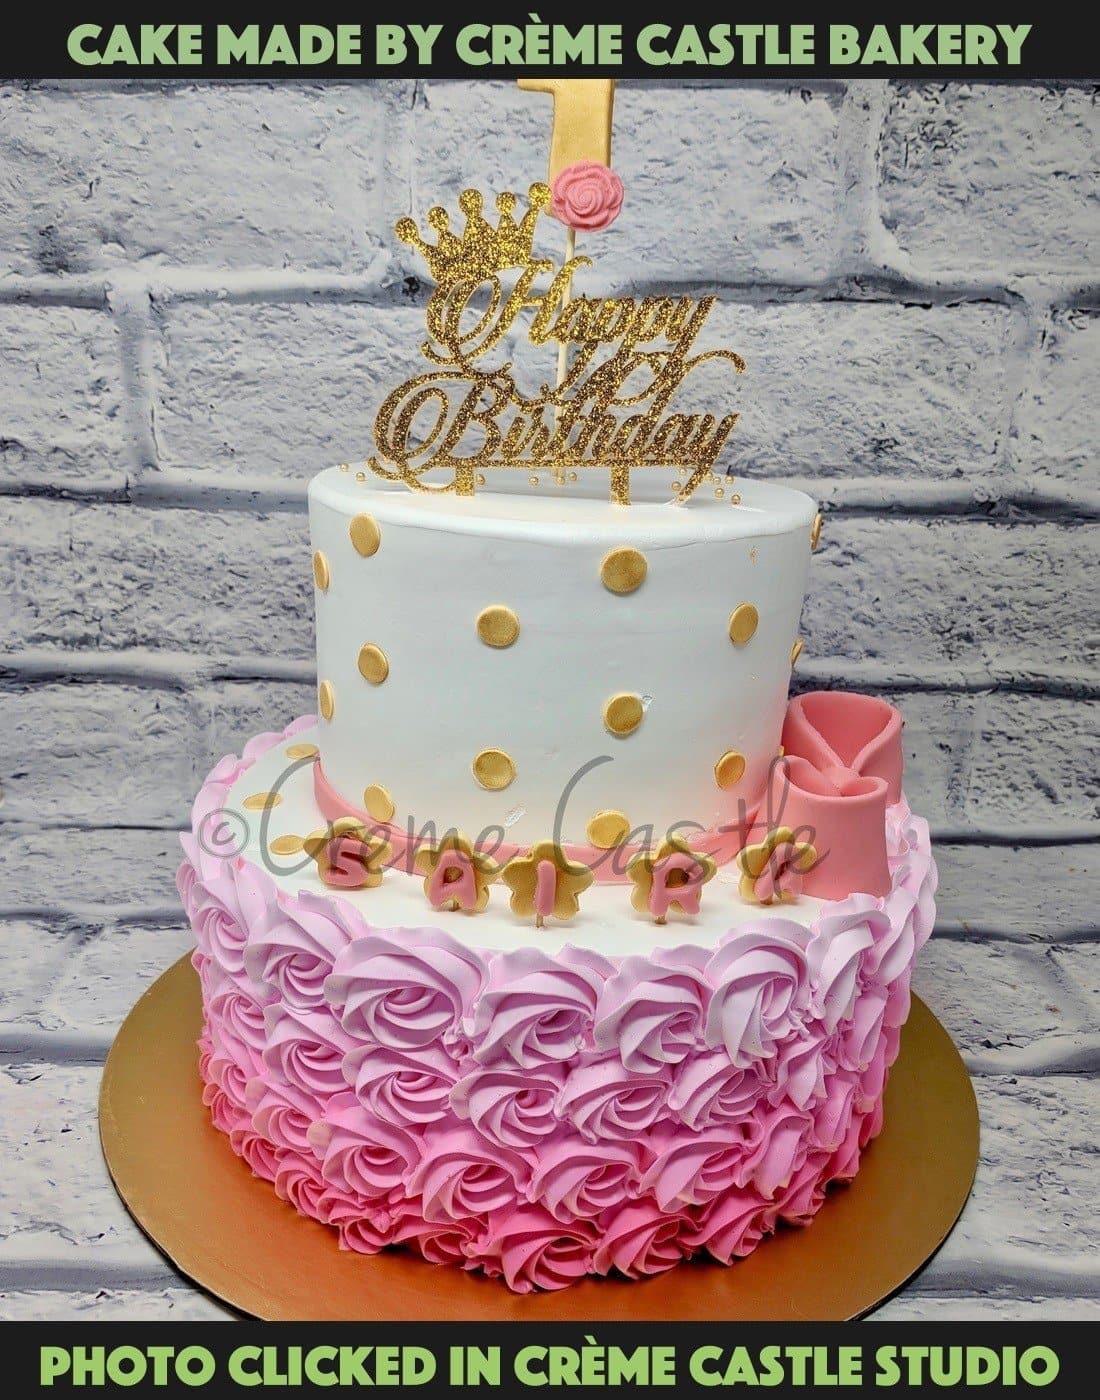 Order girls birthday pink cakes in Gurgaon | Gurgaon Bakers